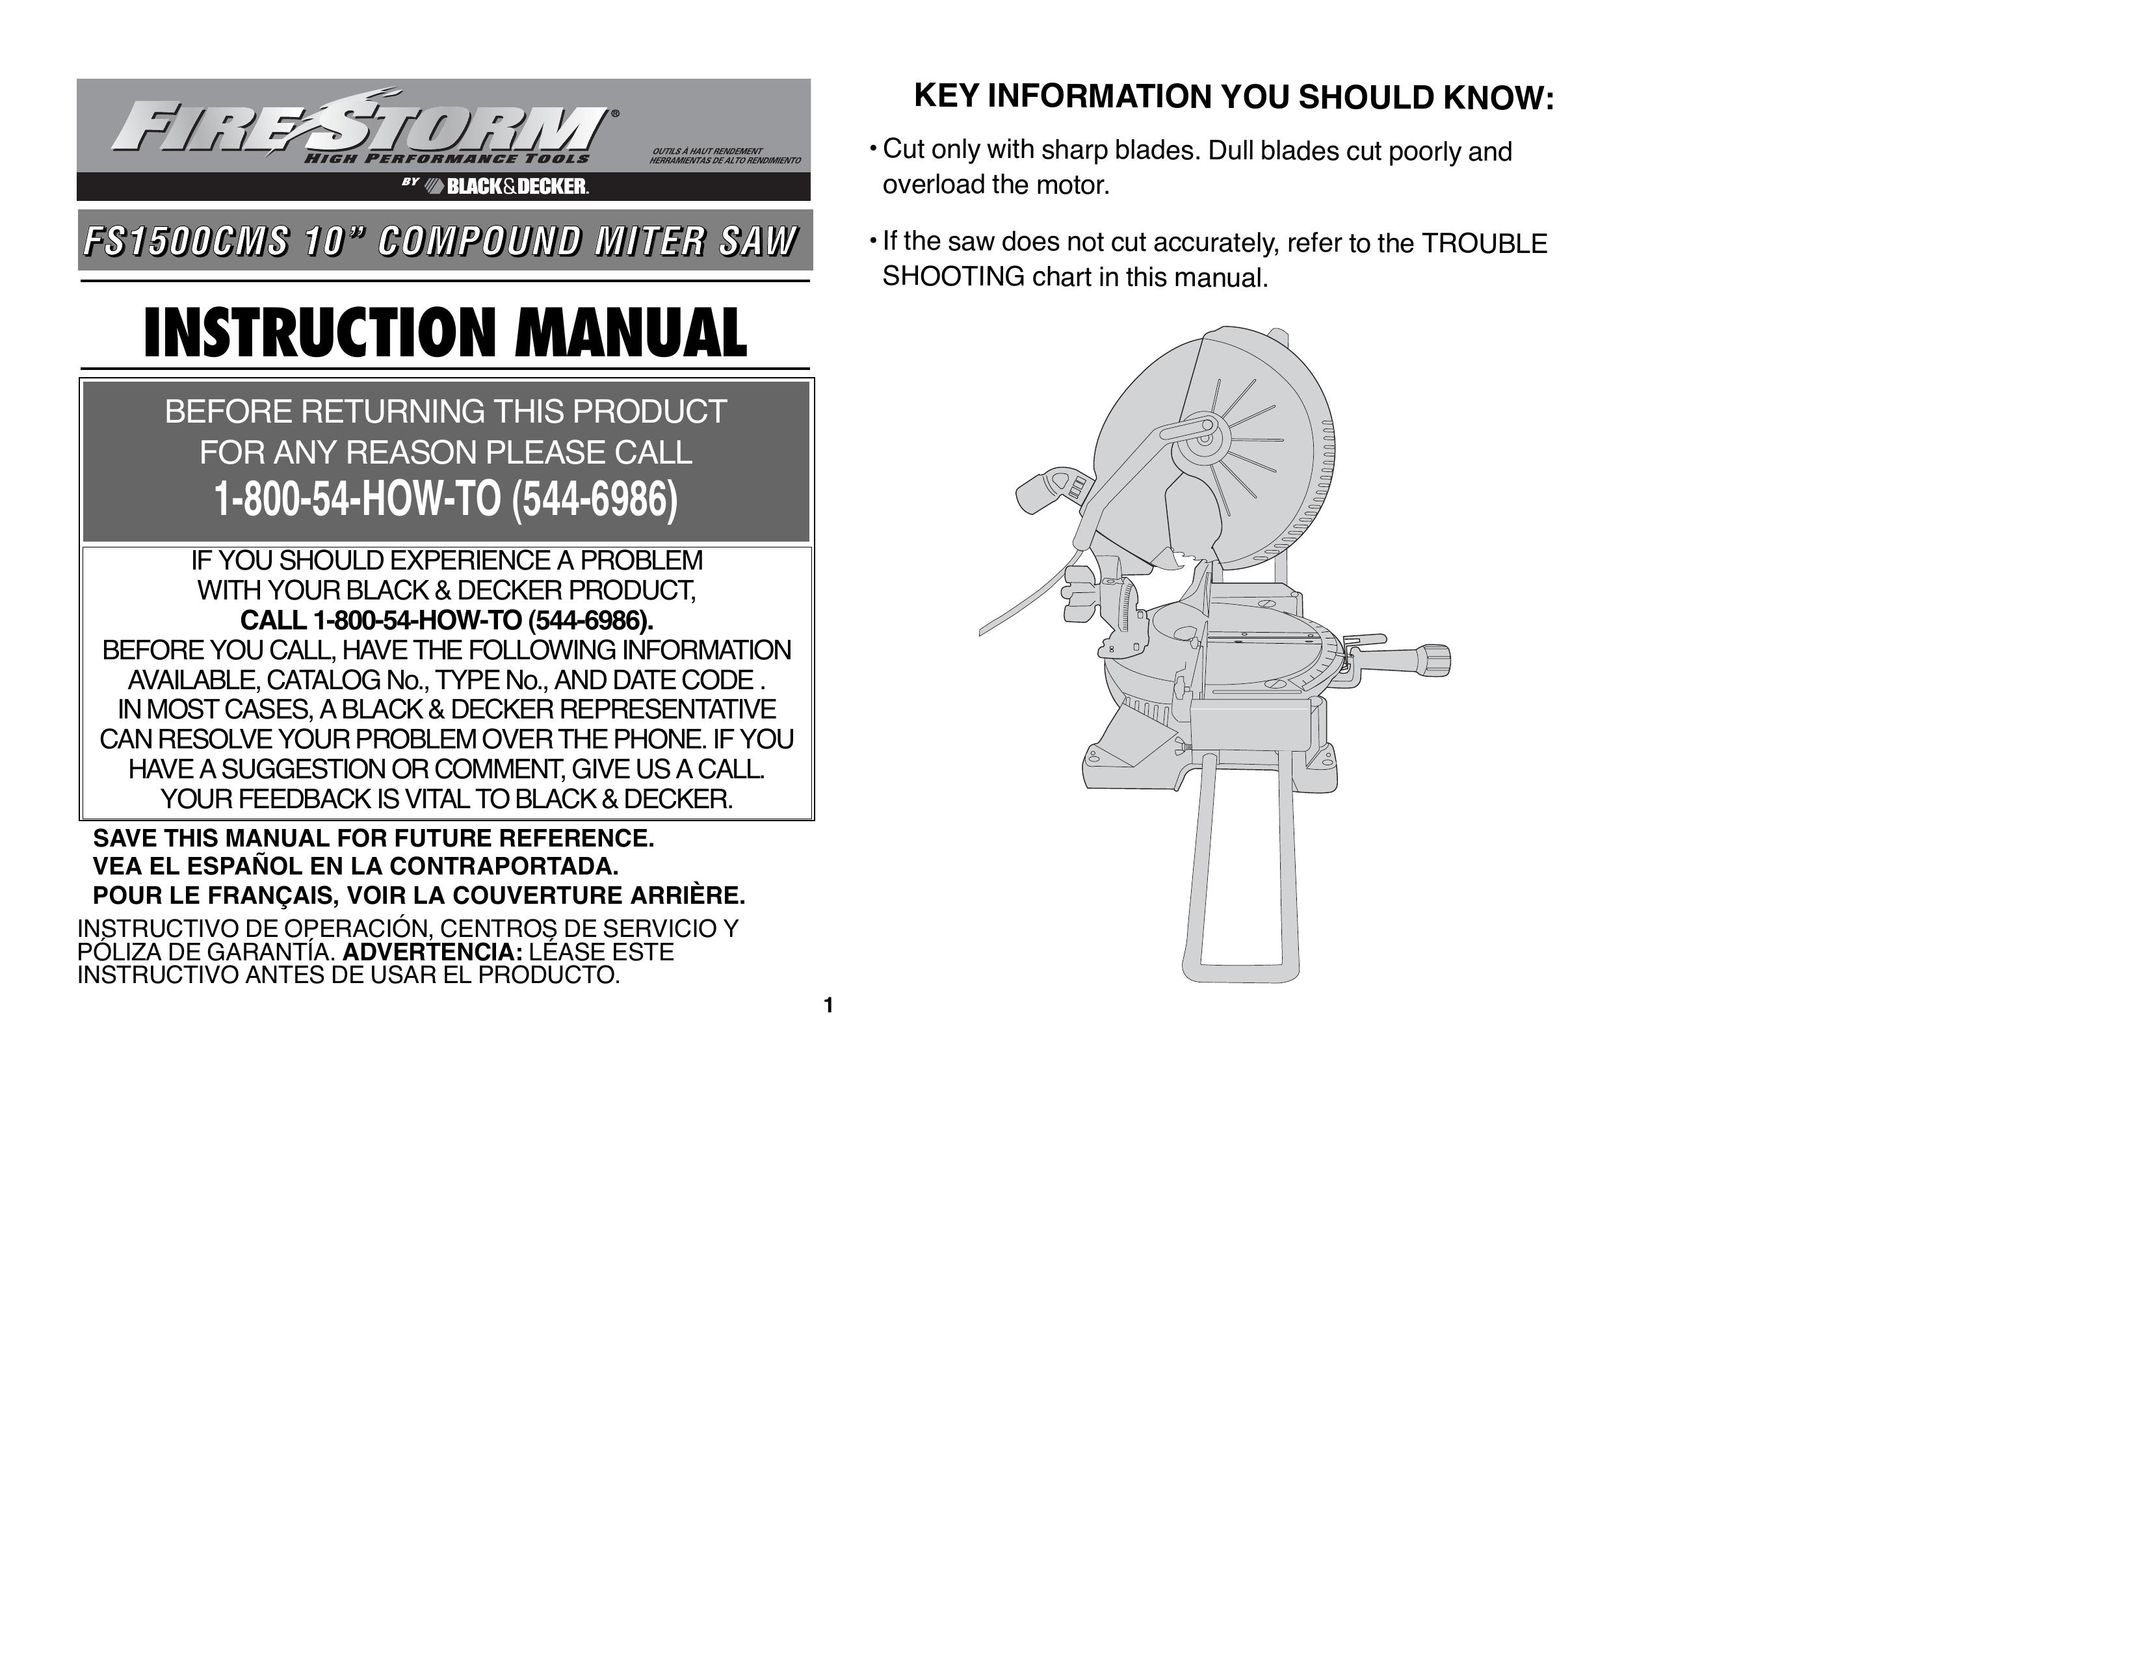 Black & Decker 629437-00 Saw User Manual